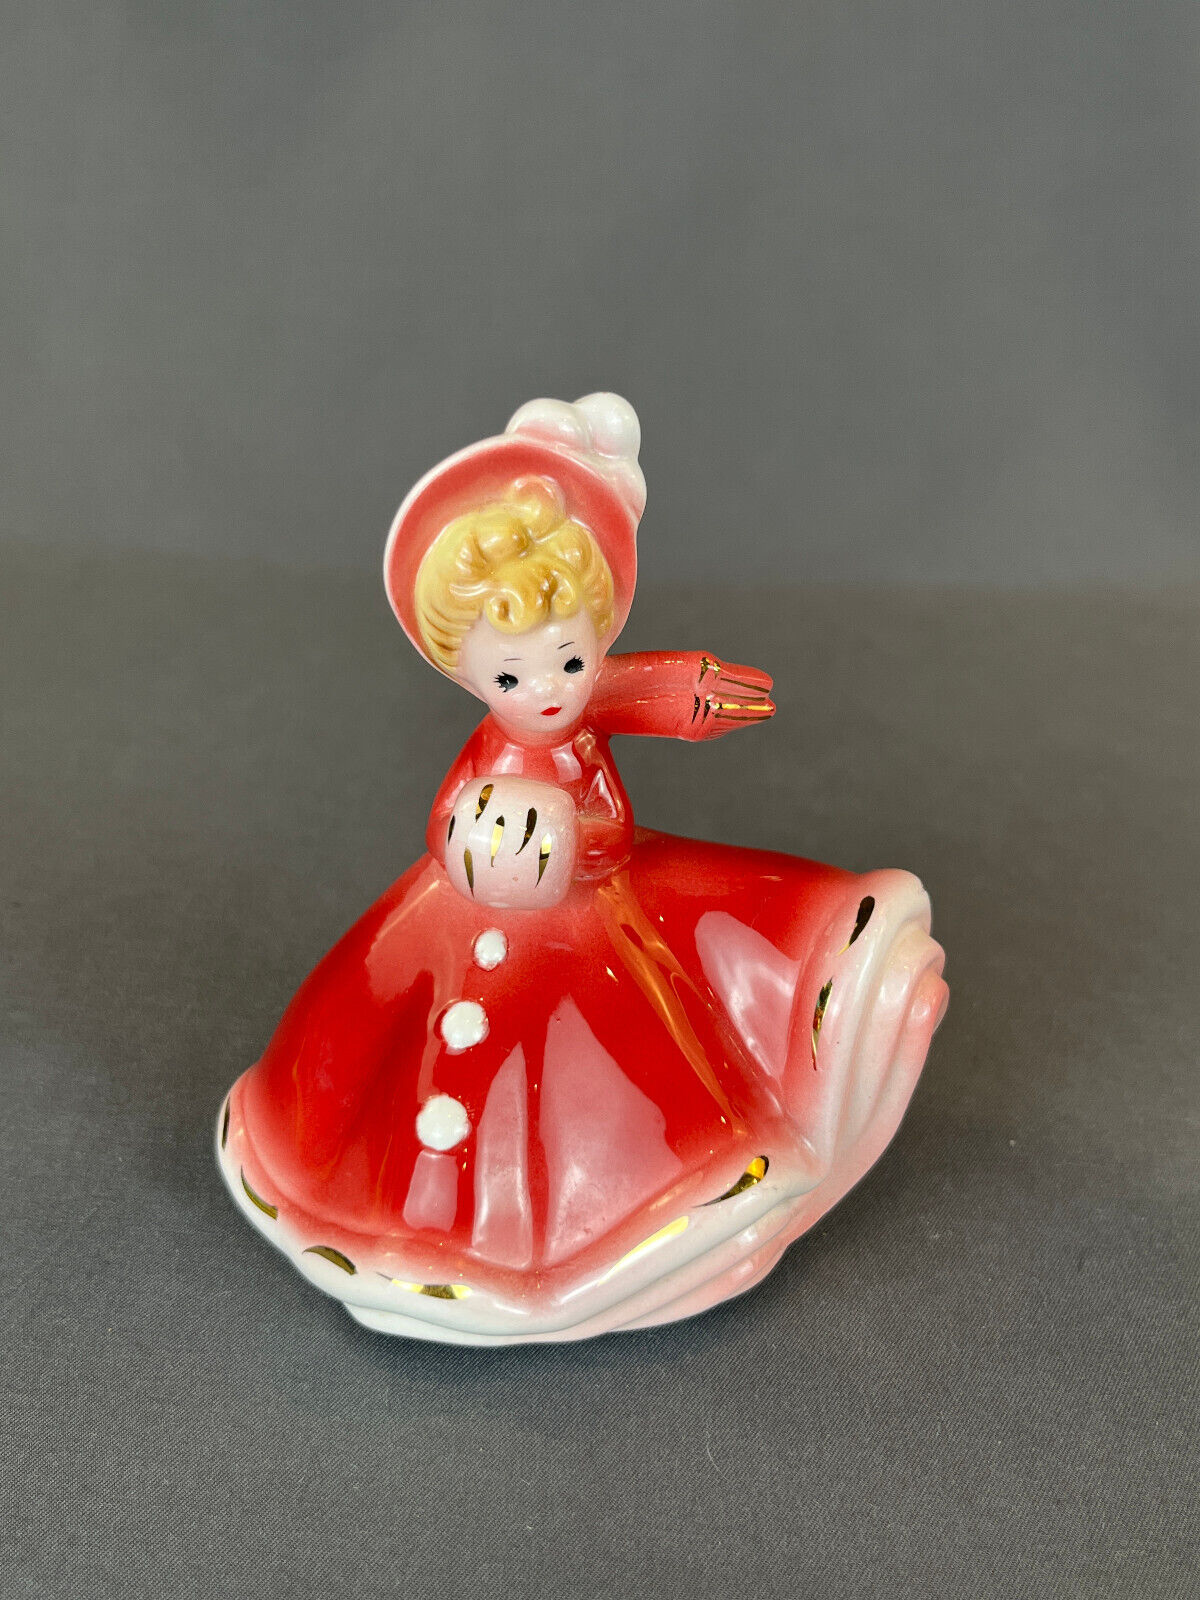 Josef Originals JANUARY 1963 Birthday Dolls Series 4” Figurine